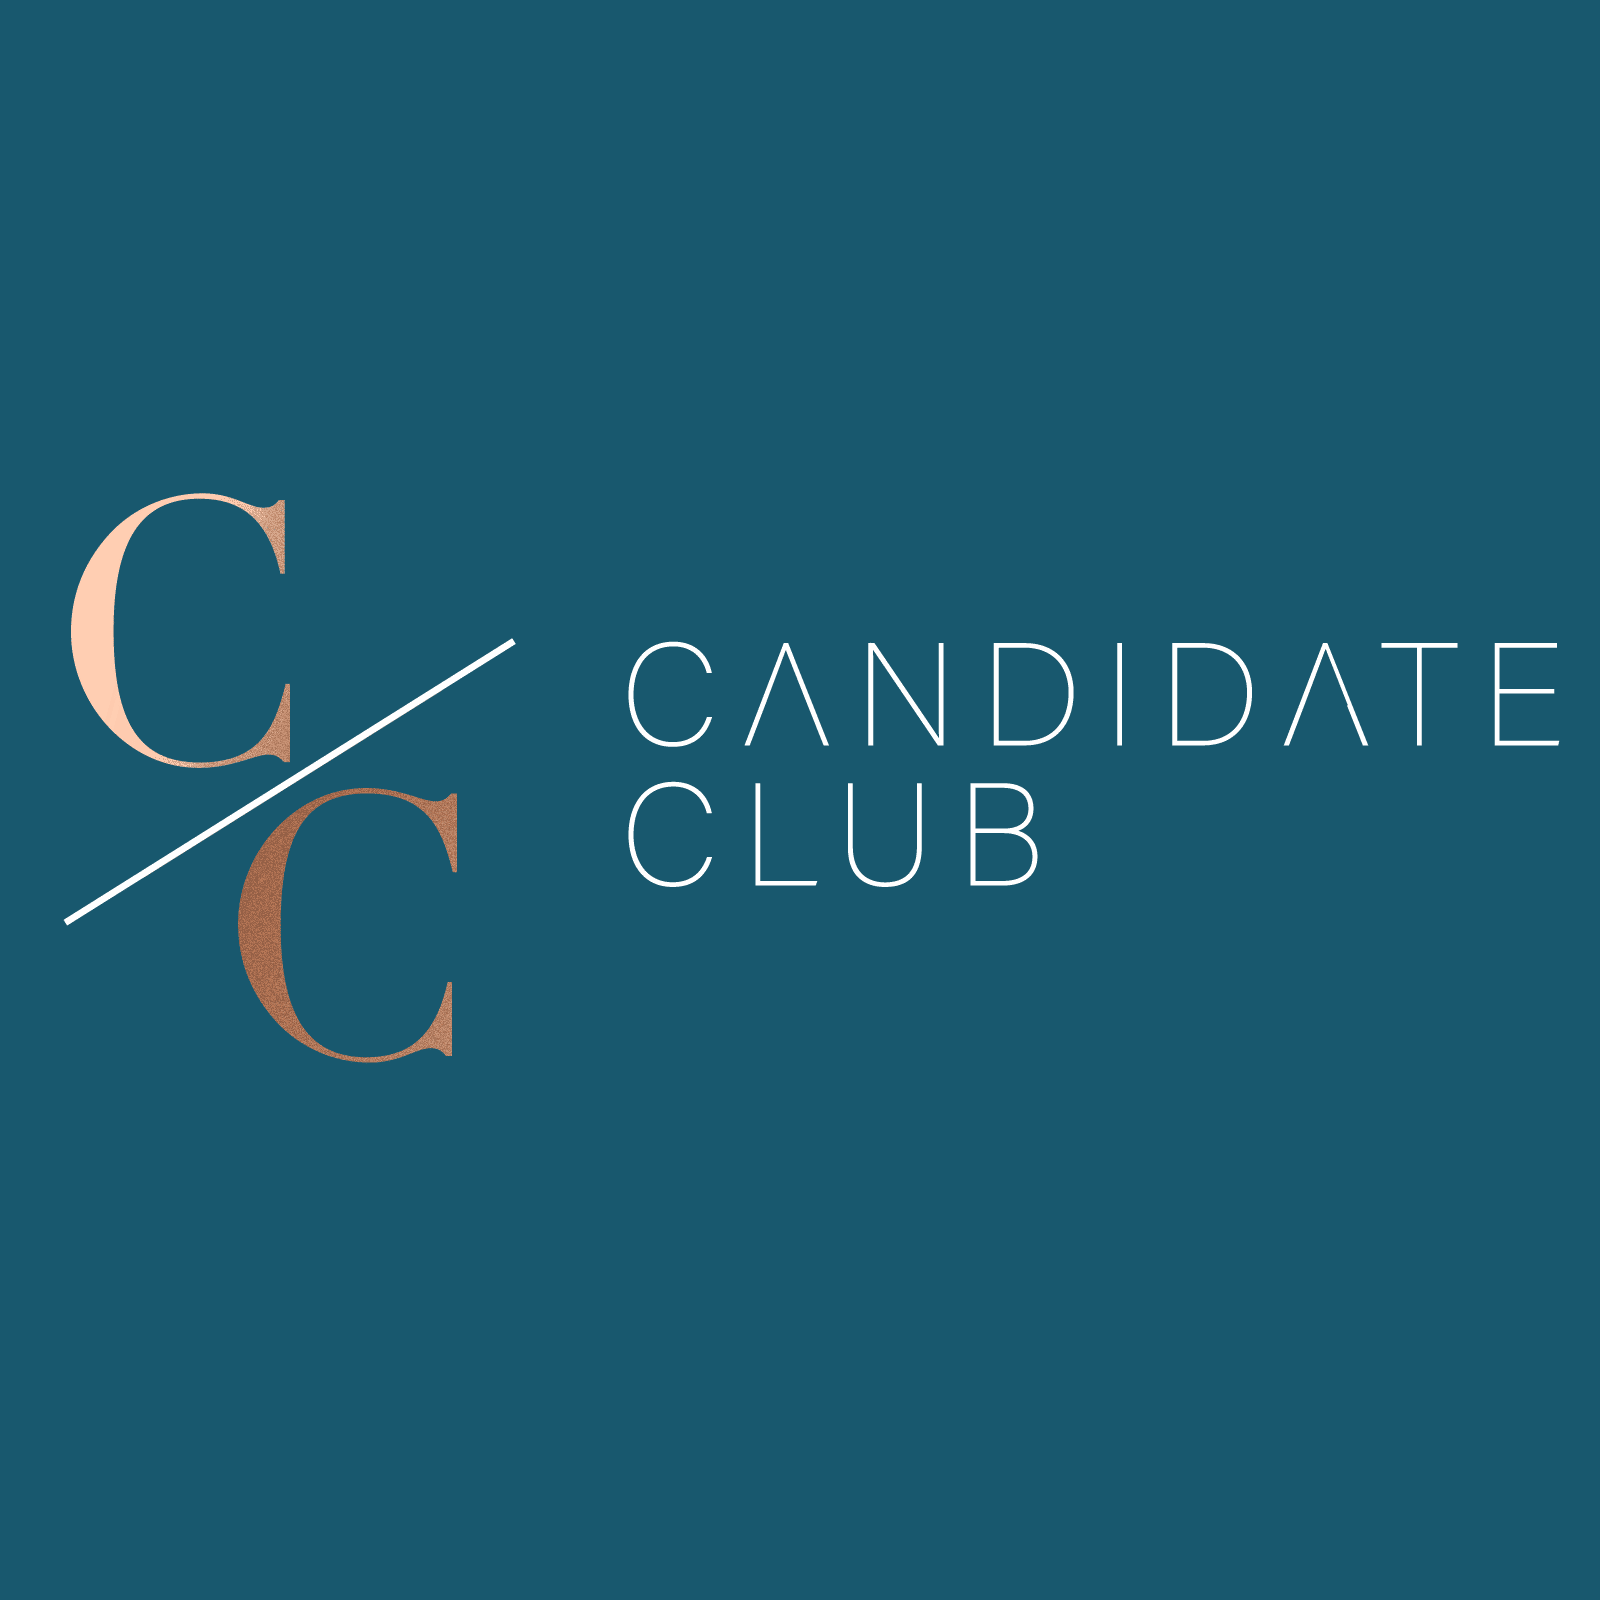 Candidate Club branding